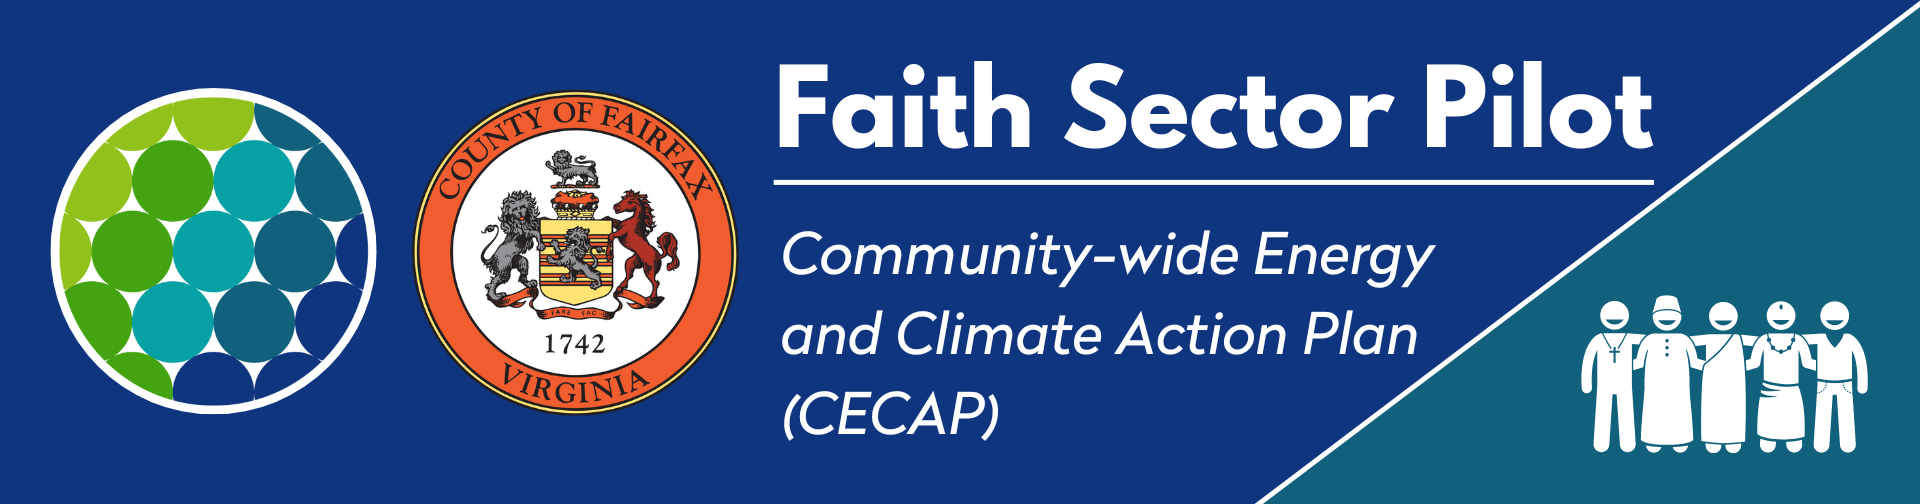 Faith Sector Pilot - CECAP